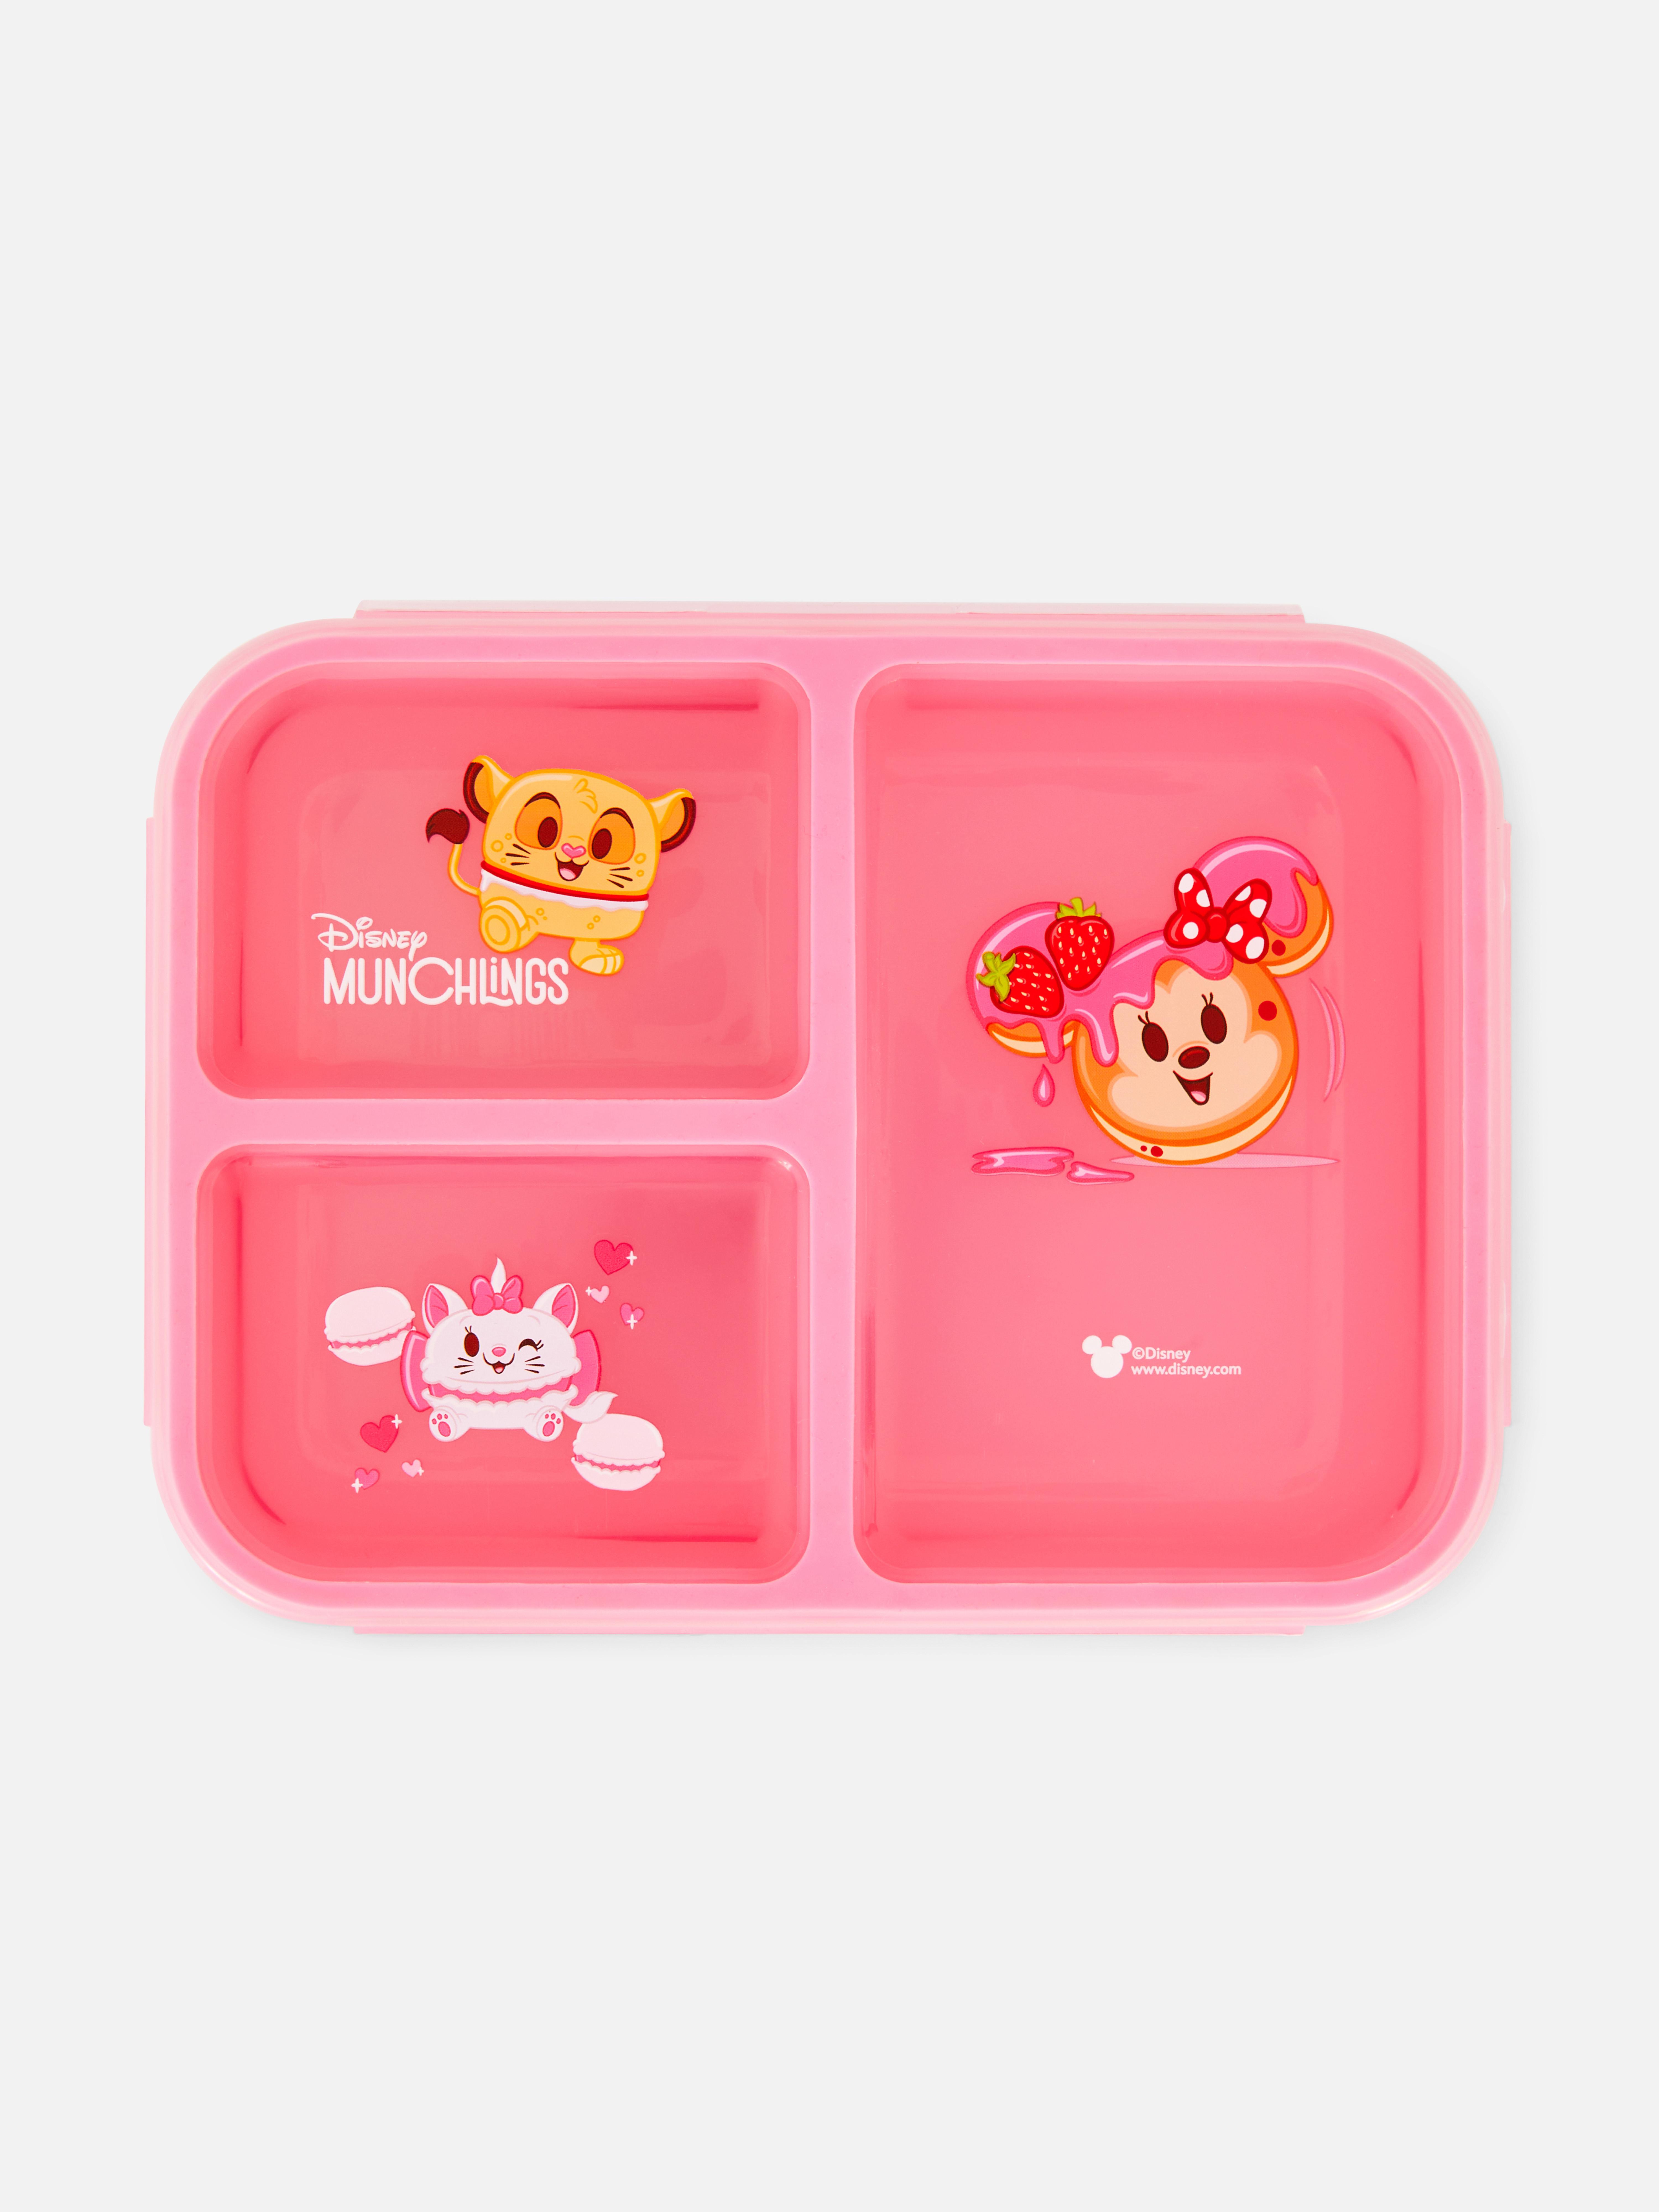 Disney's Munchlings Bento Lunch Box